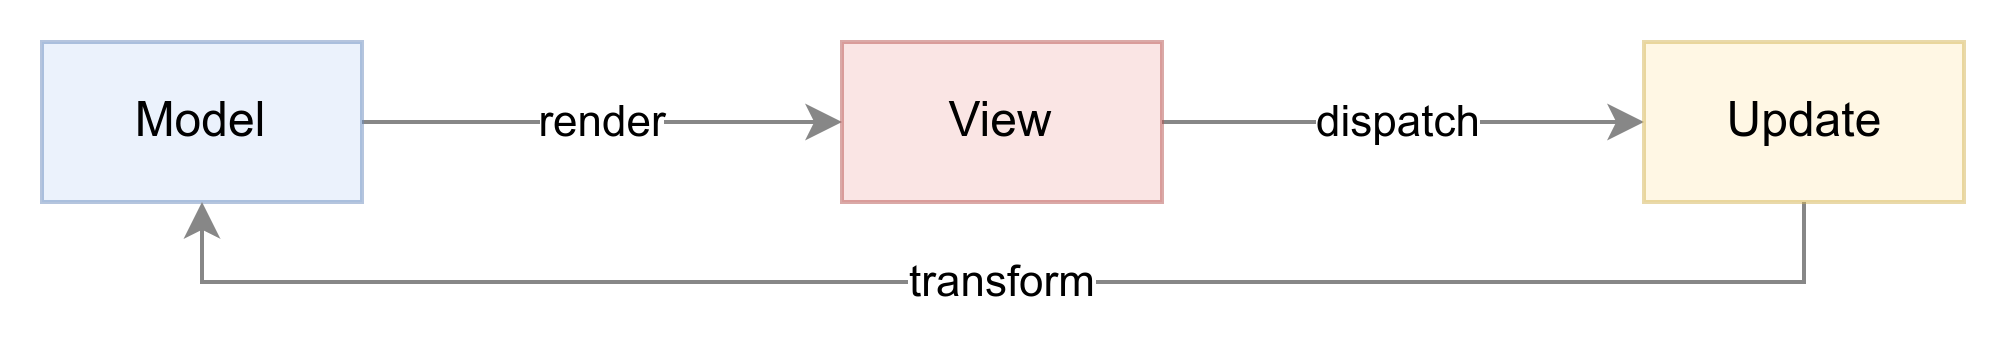 A diagram showing how the MVU architecture propagates changes.